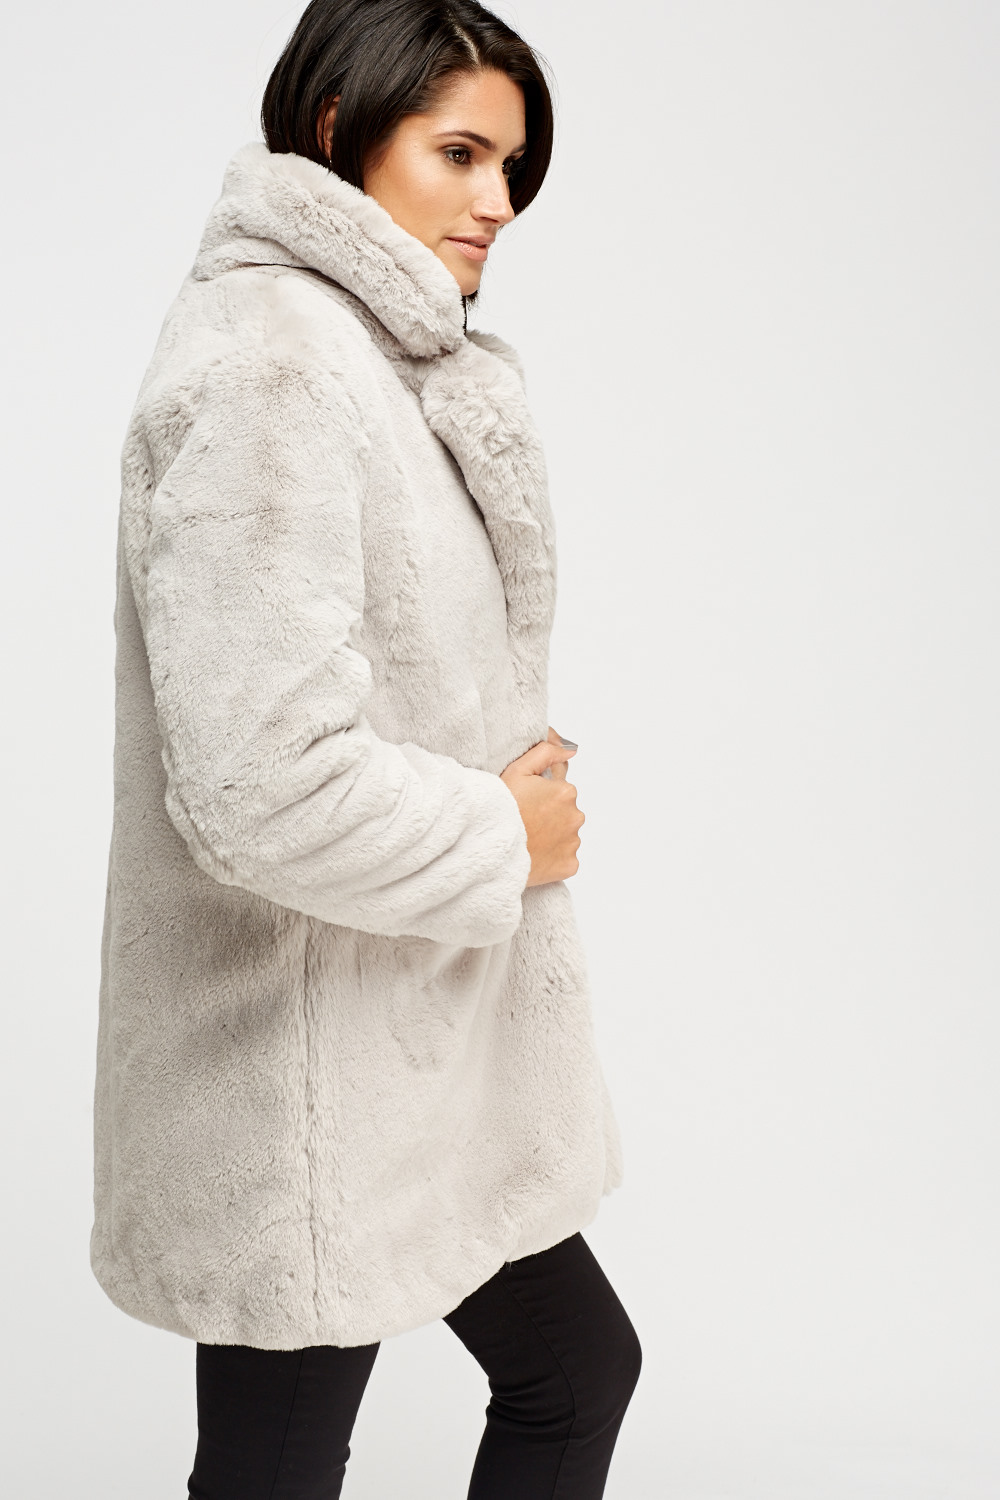 K Zell Grey Teddy Bear Faux Fur Coat - Limited edition | Discount ...